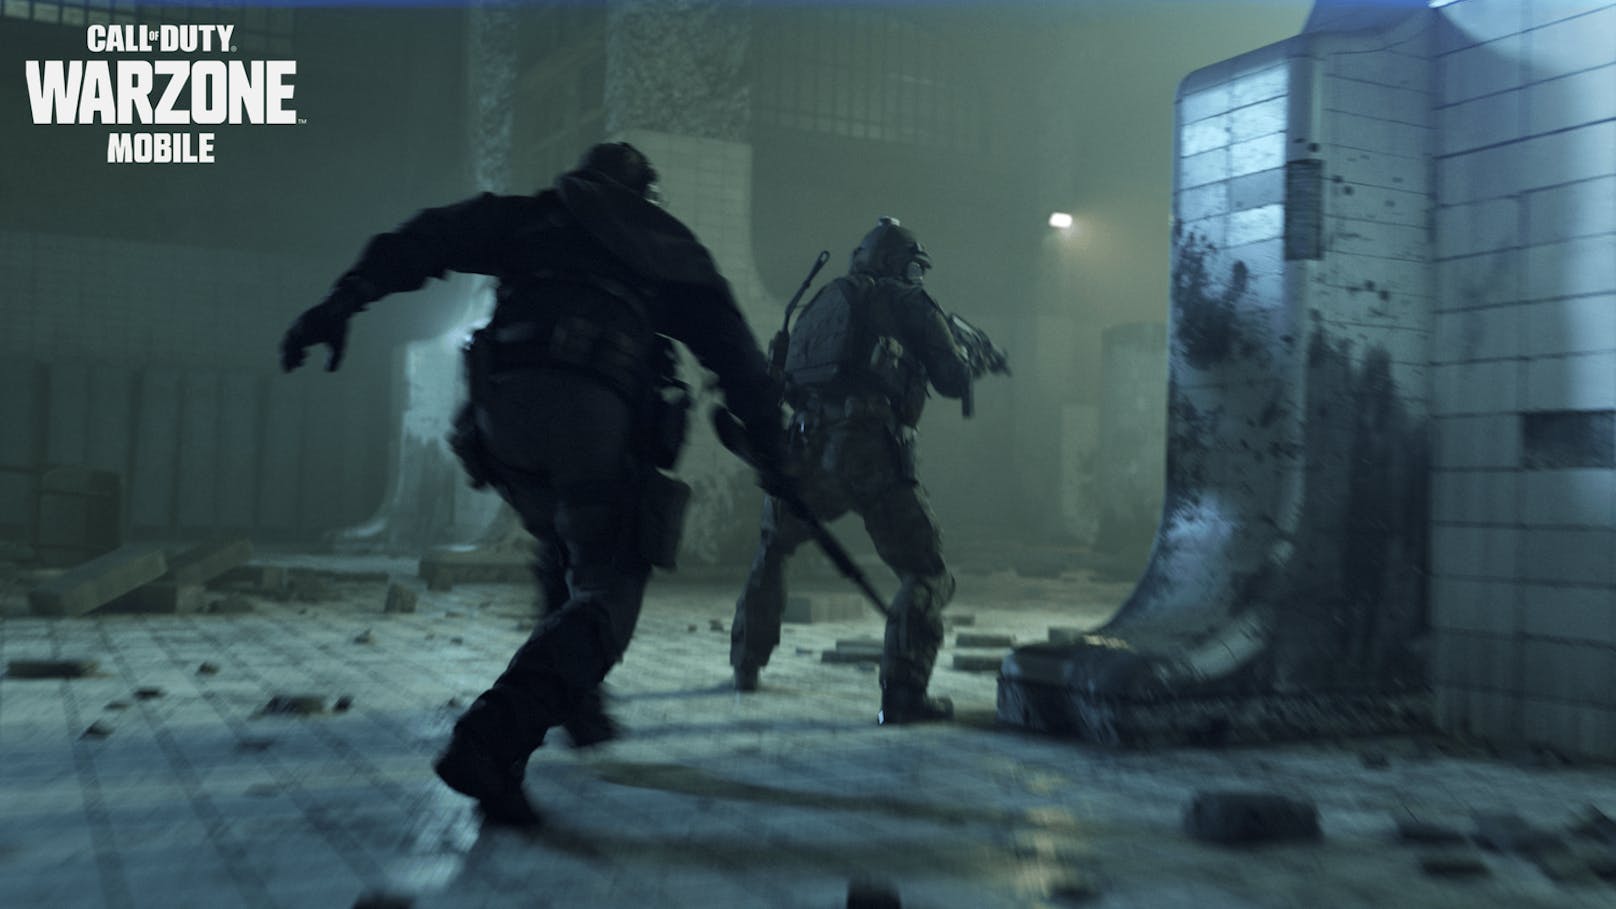 Chris Plummer spricht über "Call of Duty: Warzone Mobile".